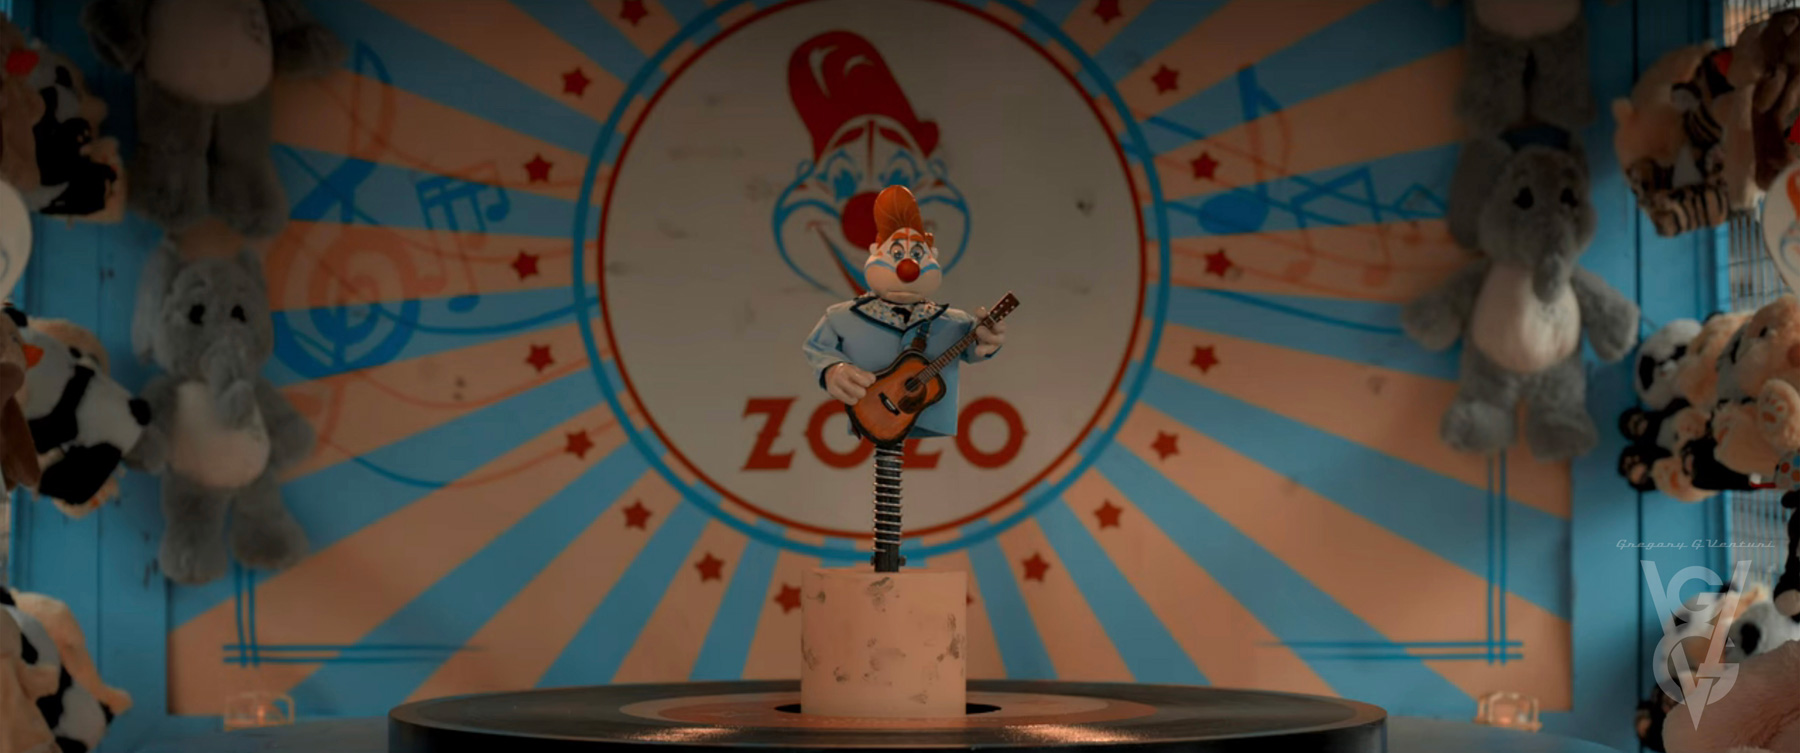 2 Lost Ollie 'Dreamland Amusement Park' Zozo's Ball Toss Booth Location Install Screen Still